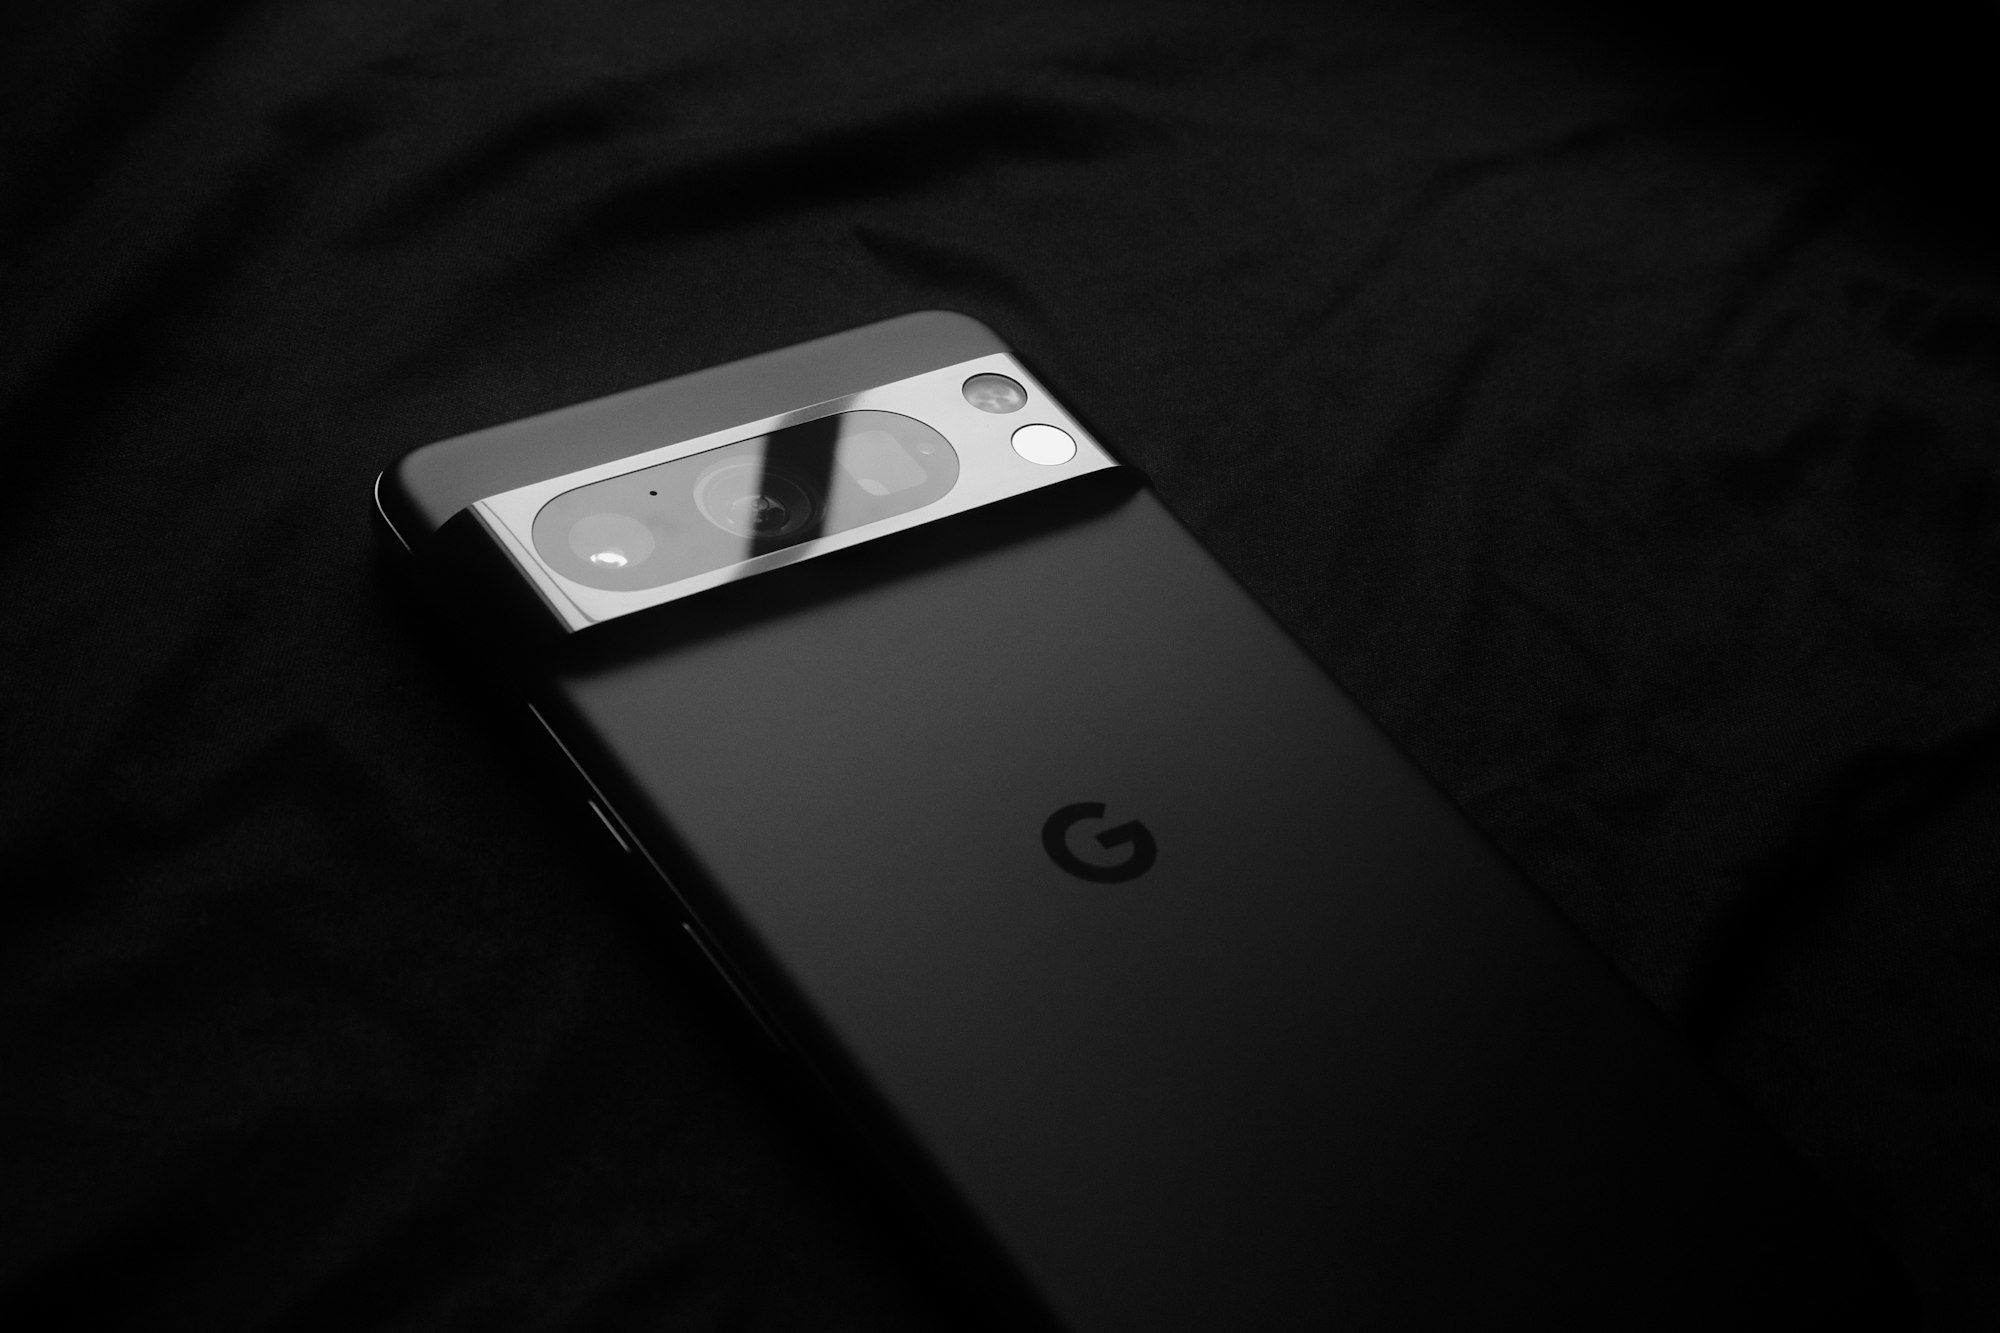 Troquei o iPhone pelo Google Pixel 8 Pro - Como foi a experiência? post image